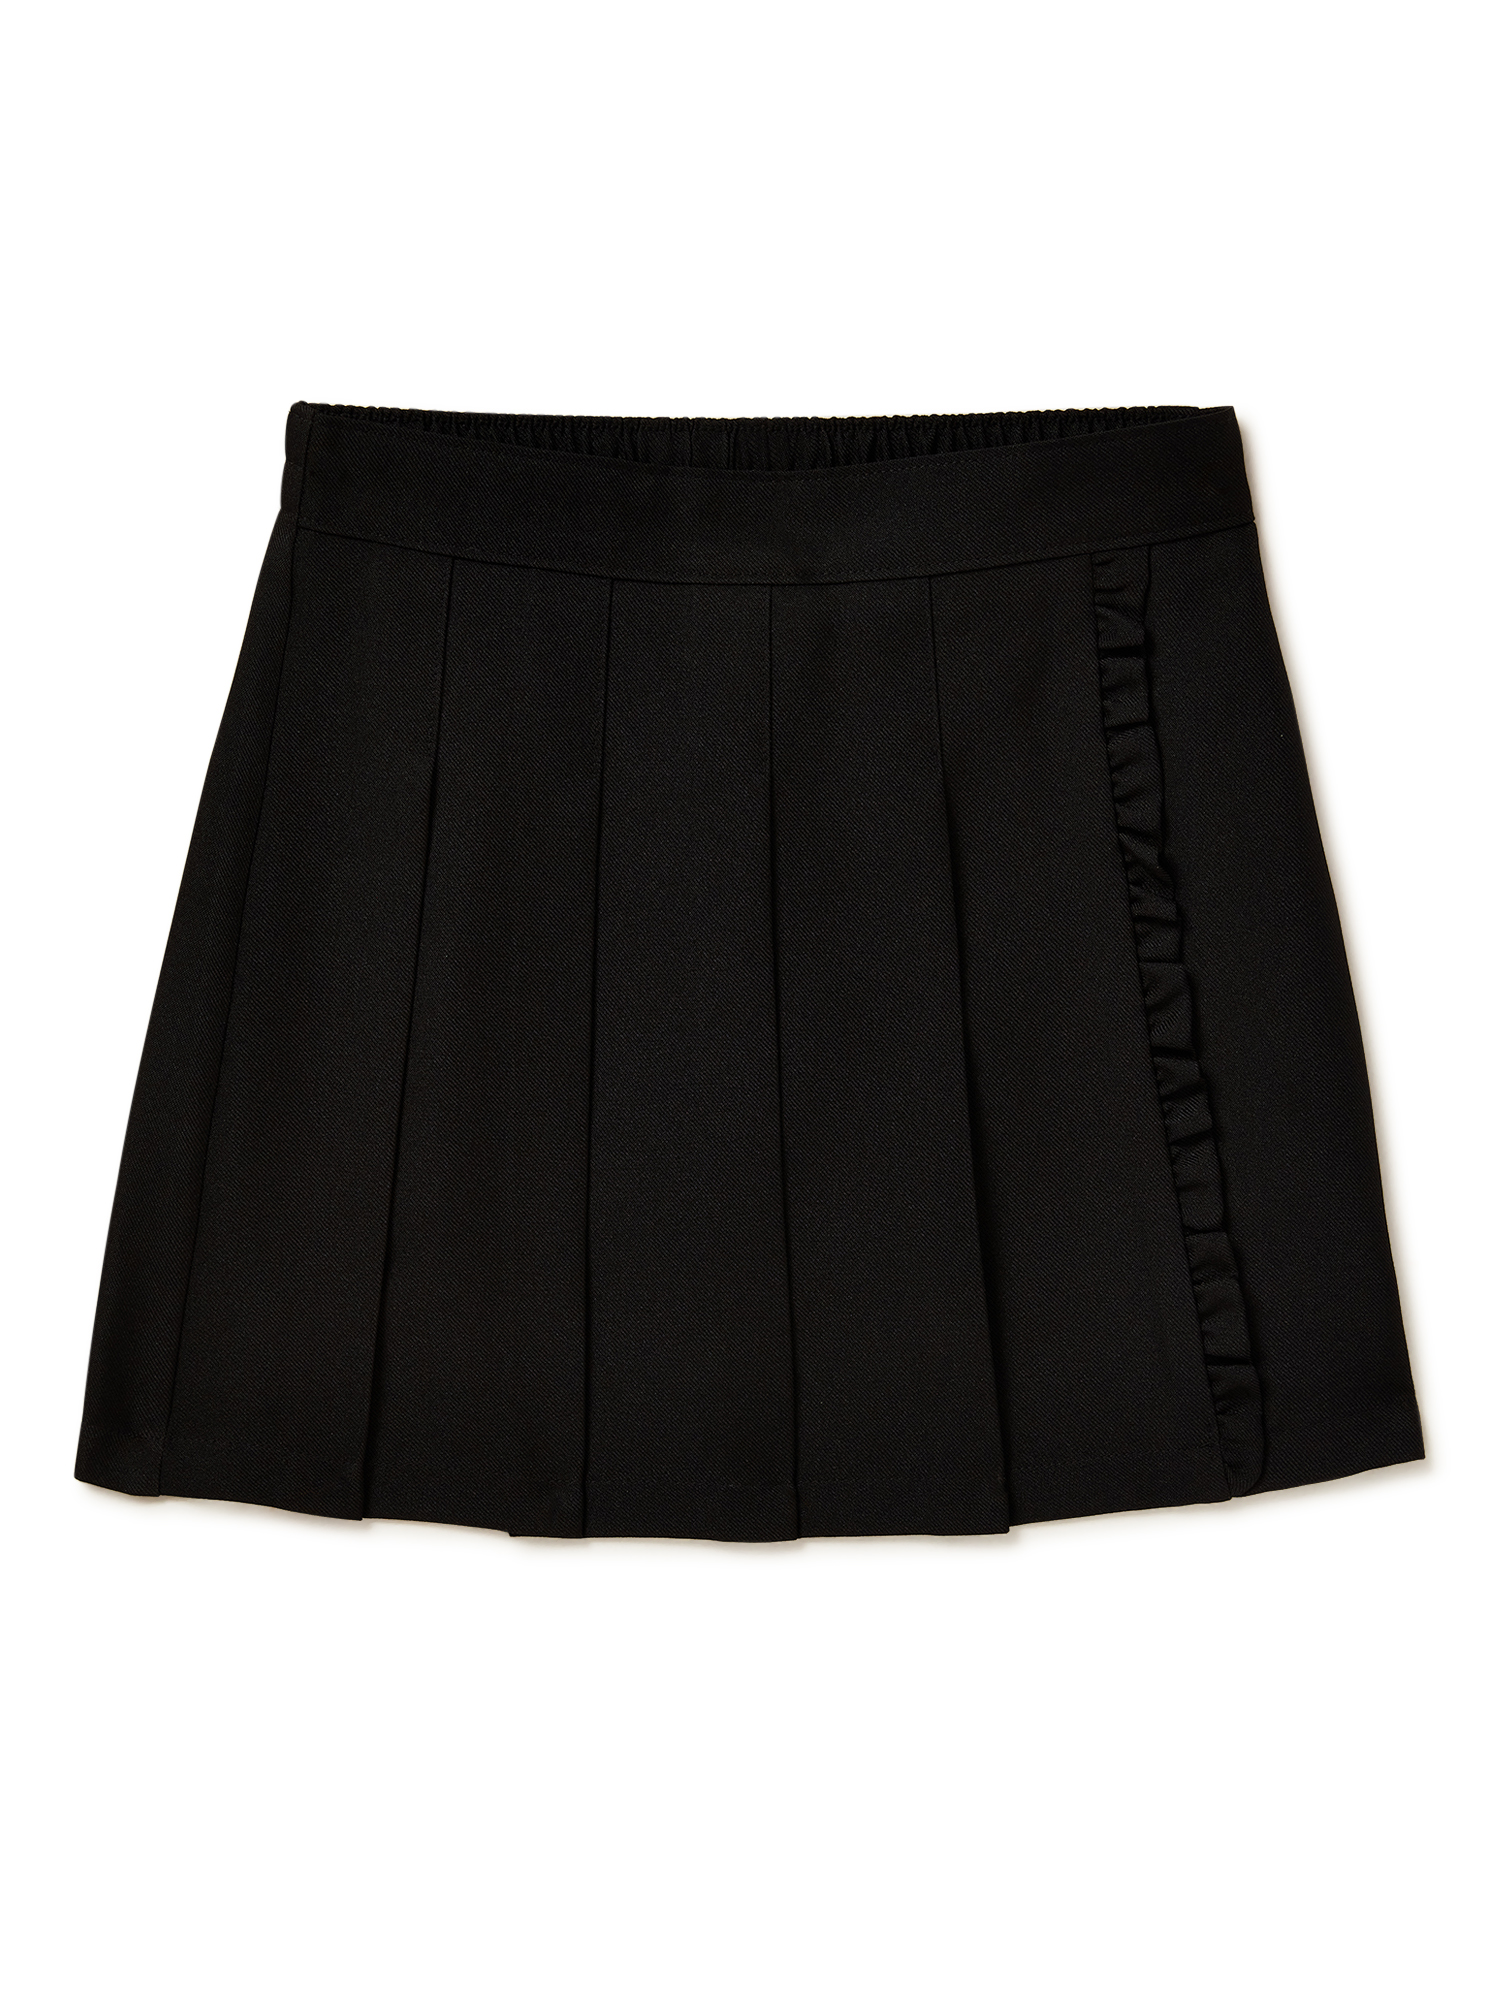 Wonder Nation Girls School Uniform Pleated Ruffle Scooter Skirt, Sizes 4-16 & 8-18 Plus